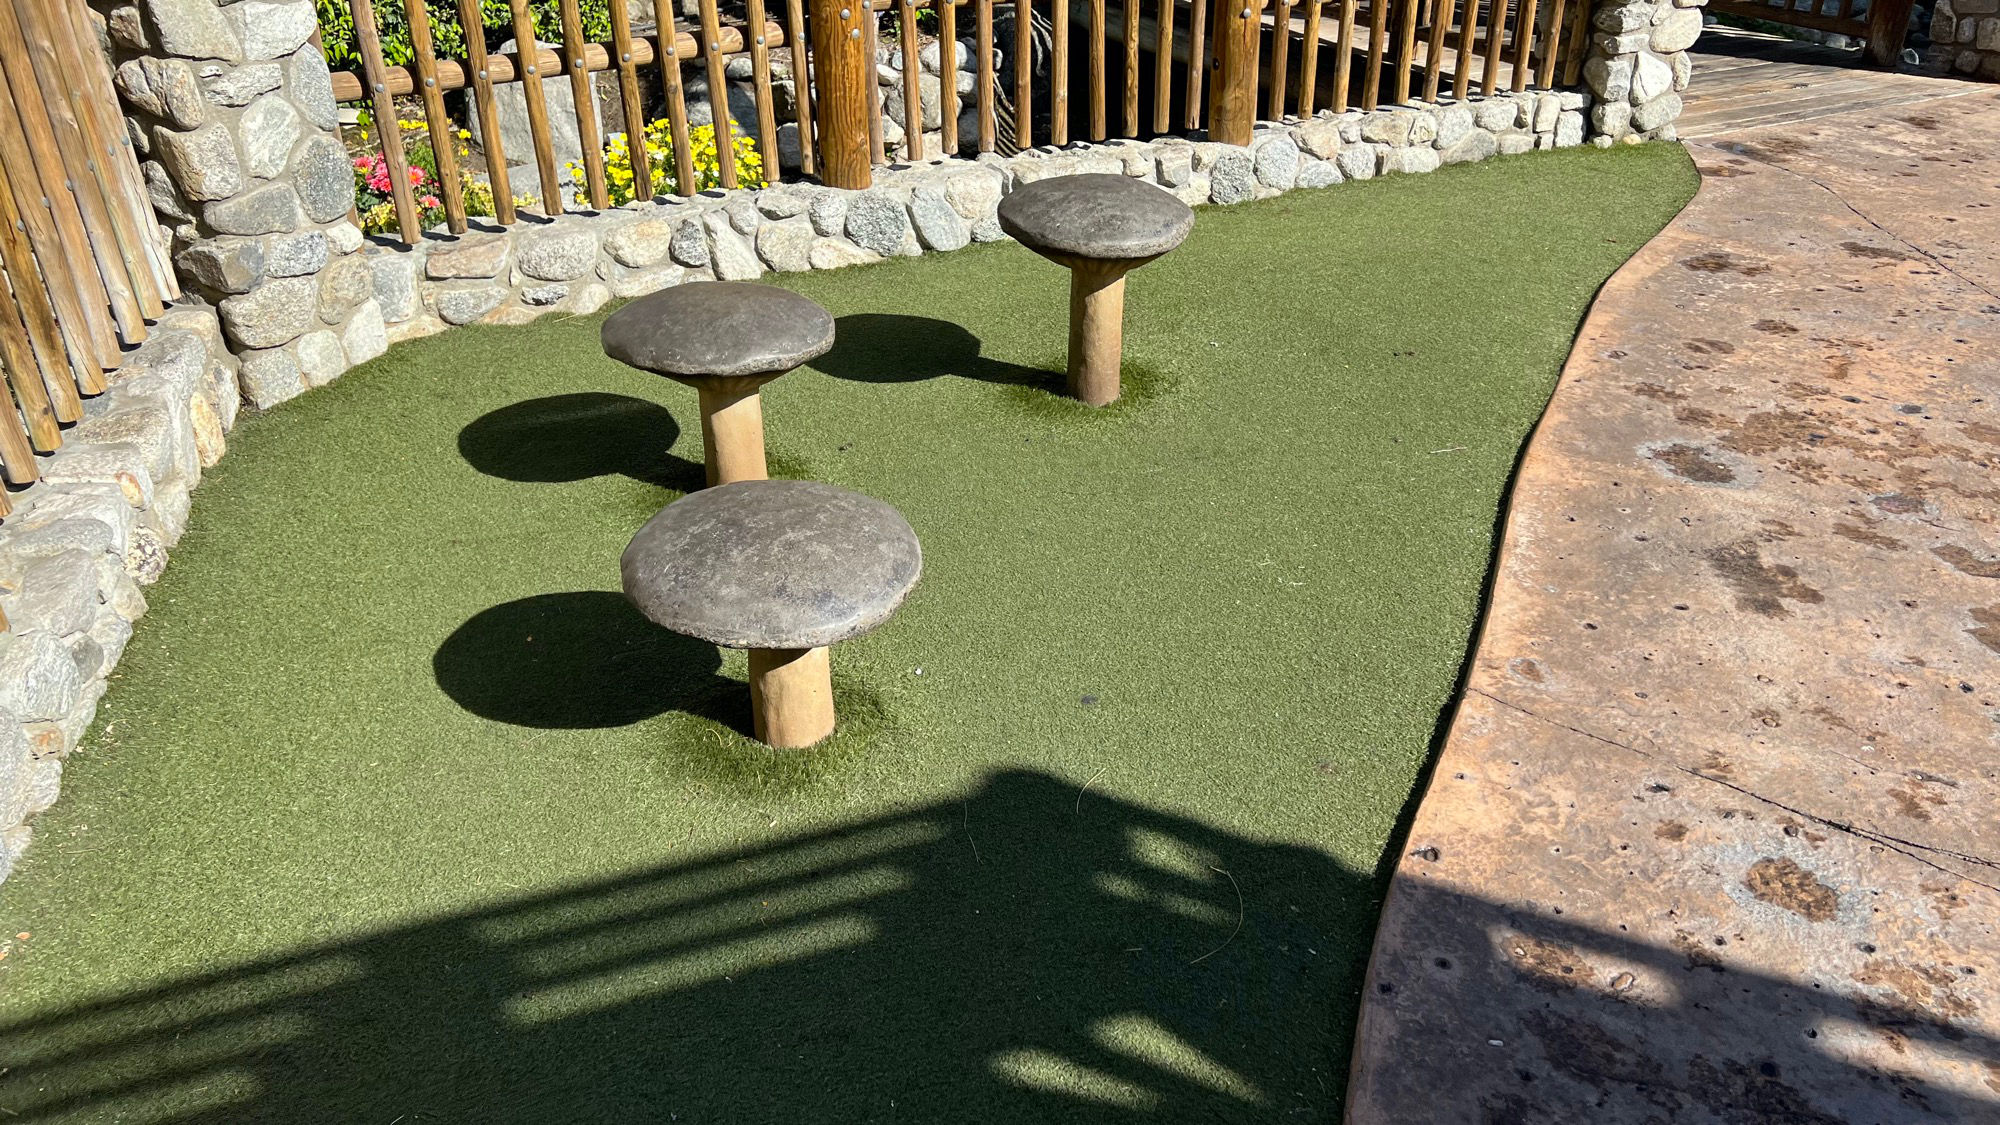 Camp Snoopy Play Area Mushrooms